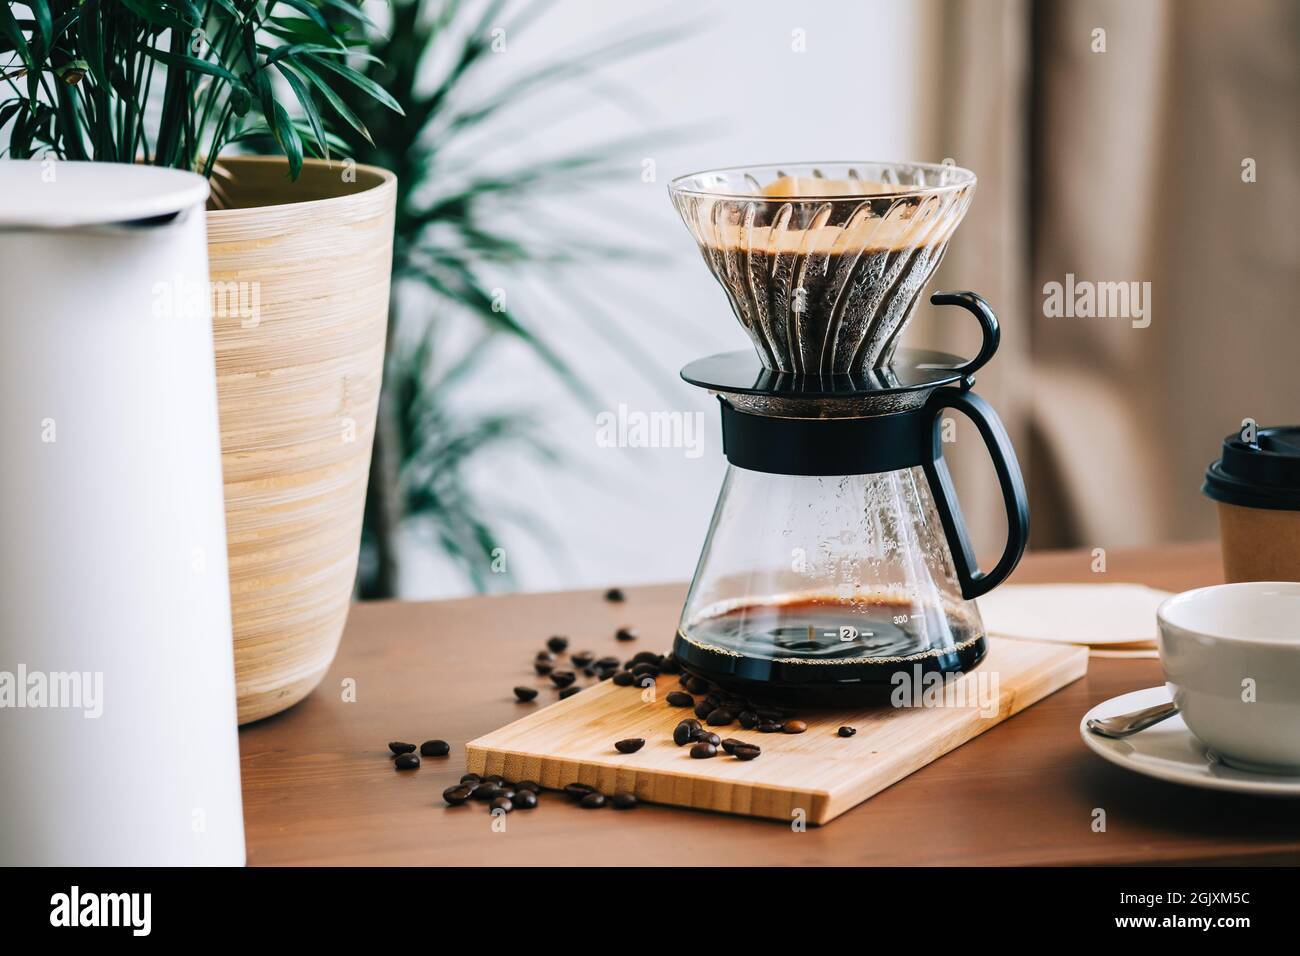 https://c8.alamy.com/comp/2GJXM5C/alternative-coffee-brewing-method-using-pour-over-dripper-and-paper-filter-2GJXM5C.jpg